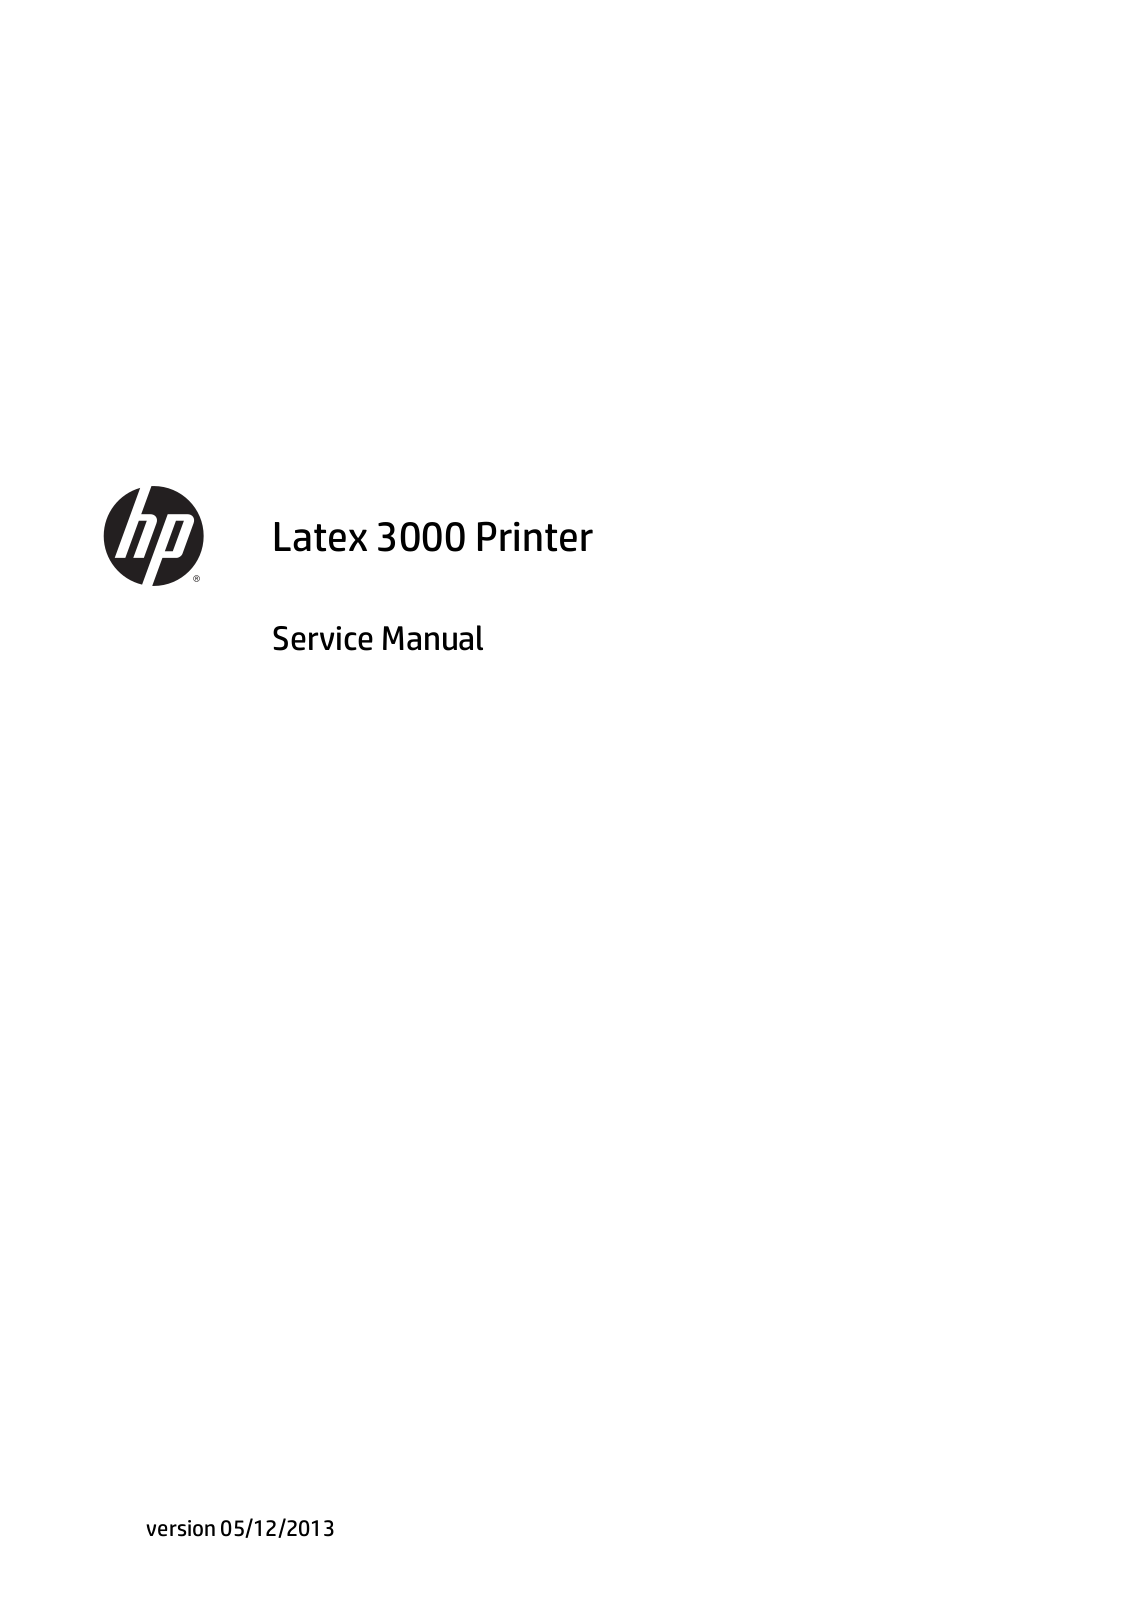 HP Latex 300 Printer Service Manual